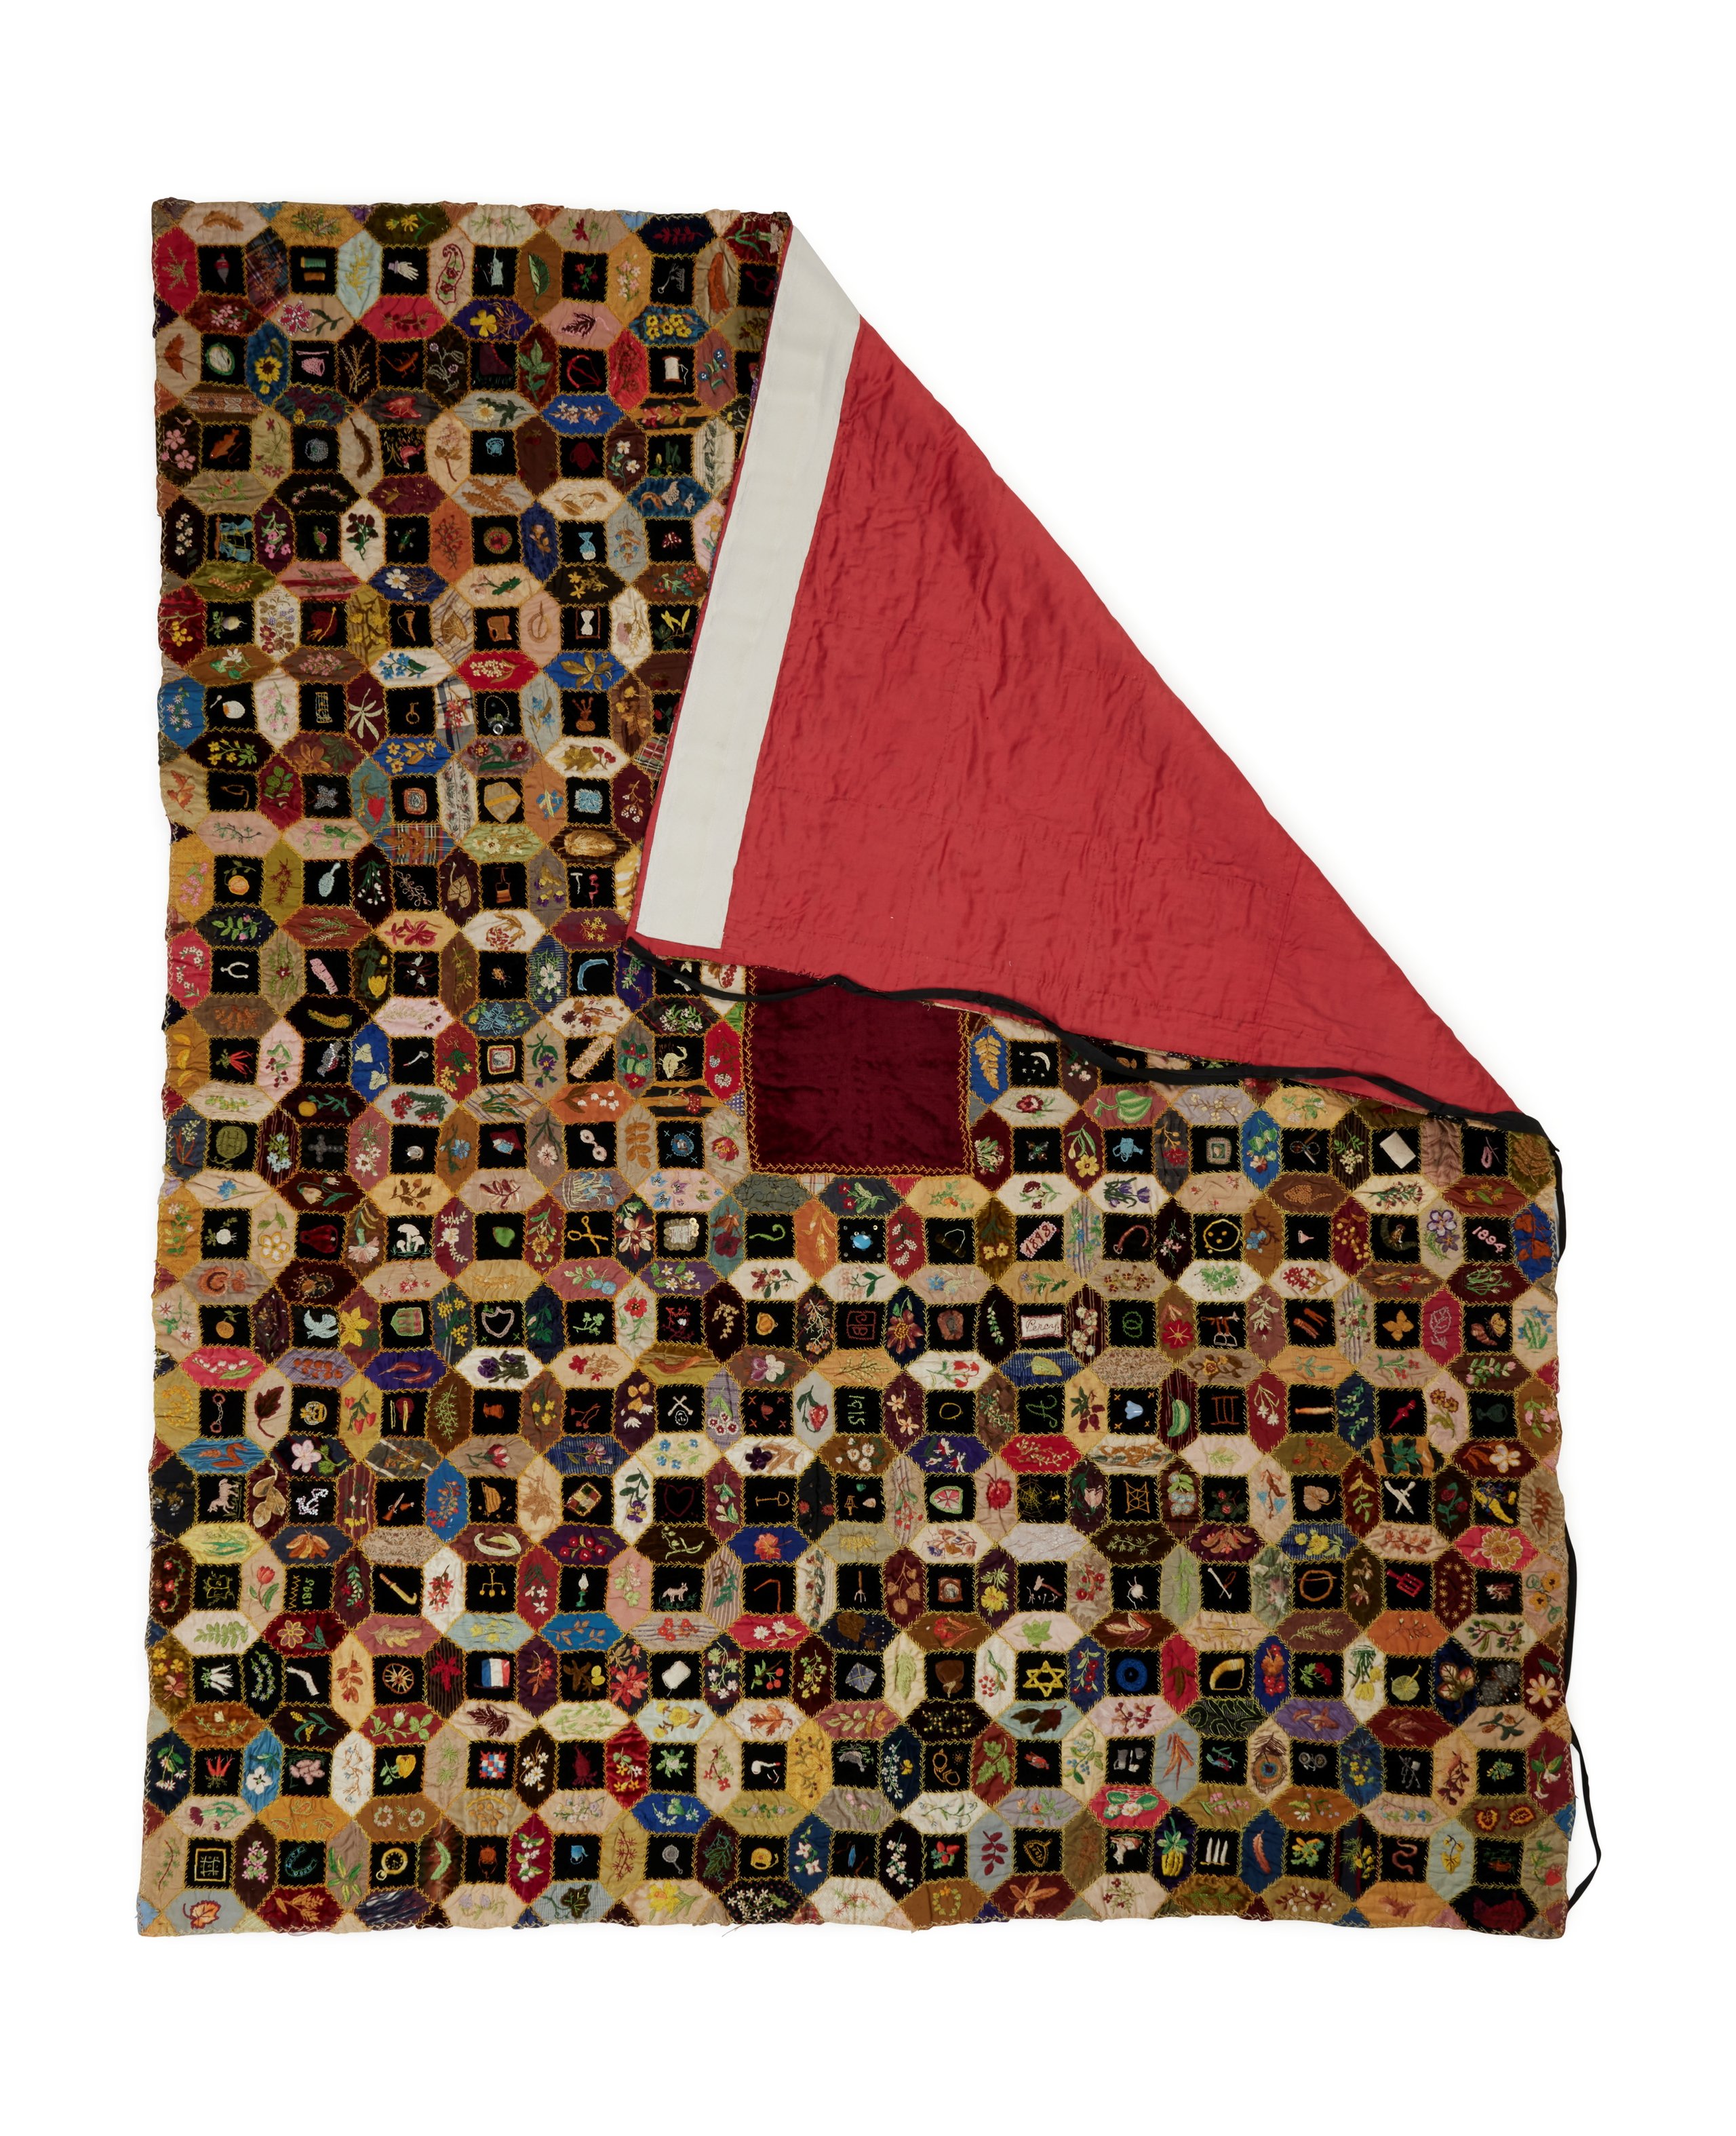 Patchwork quilt 'Aunt Clara's quilt' by Clara Bate